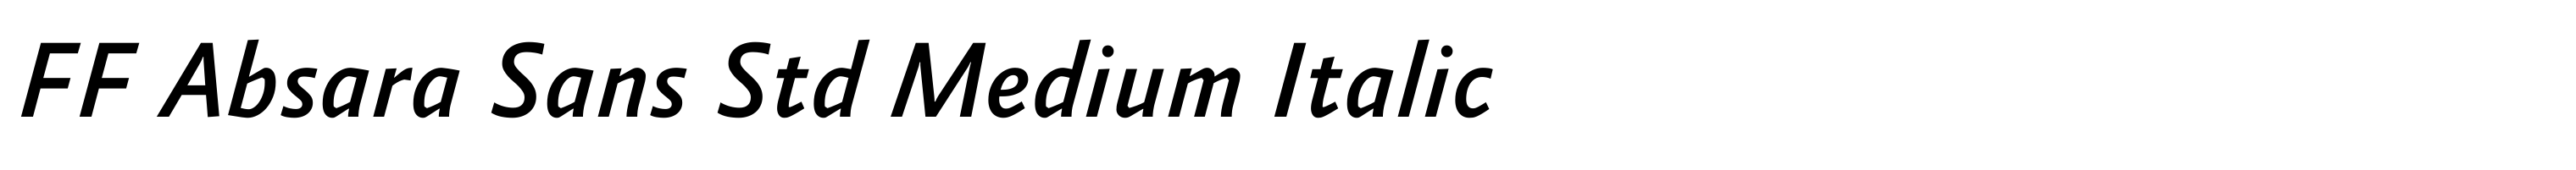 FF Absara Sans Std Medium Italic